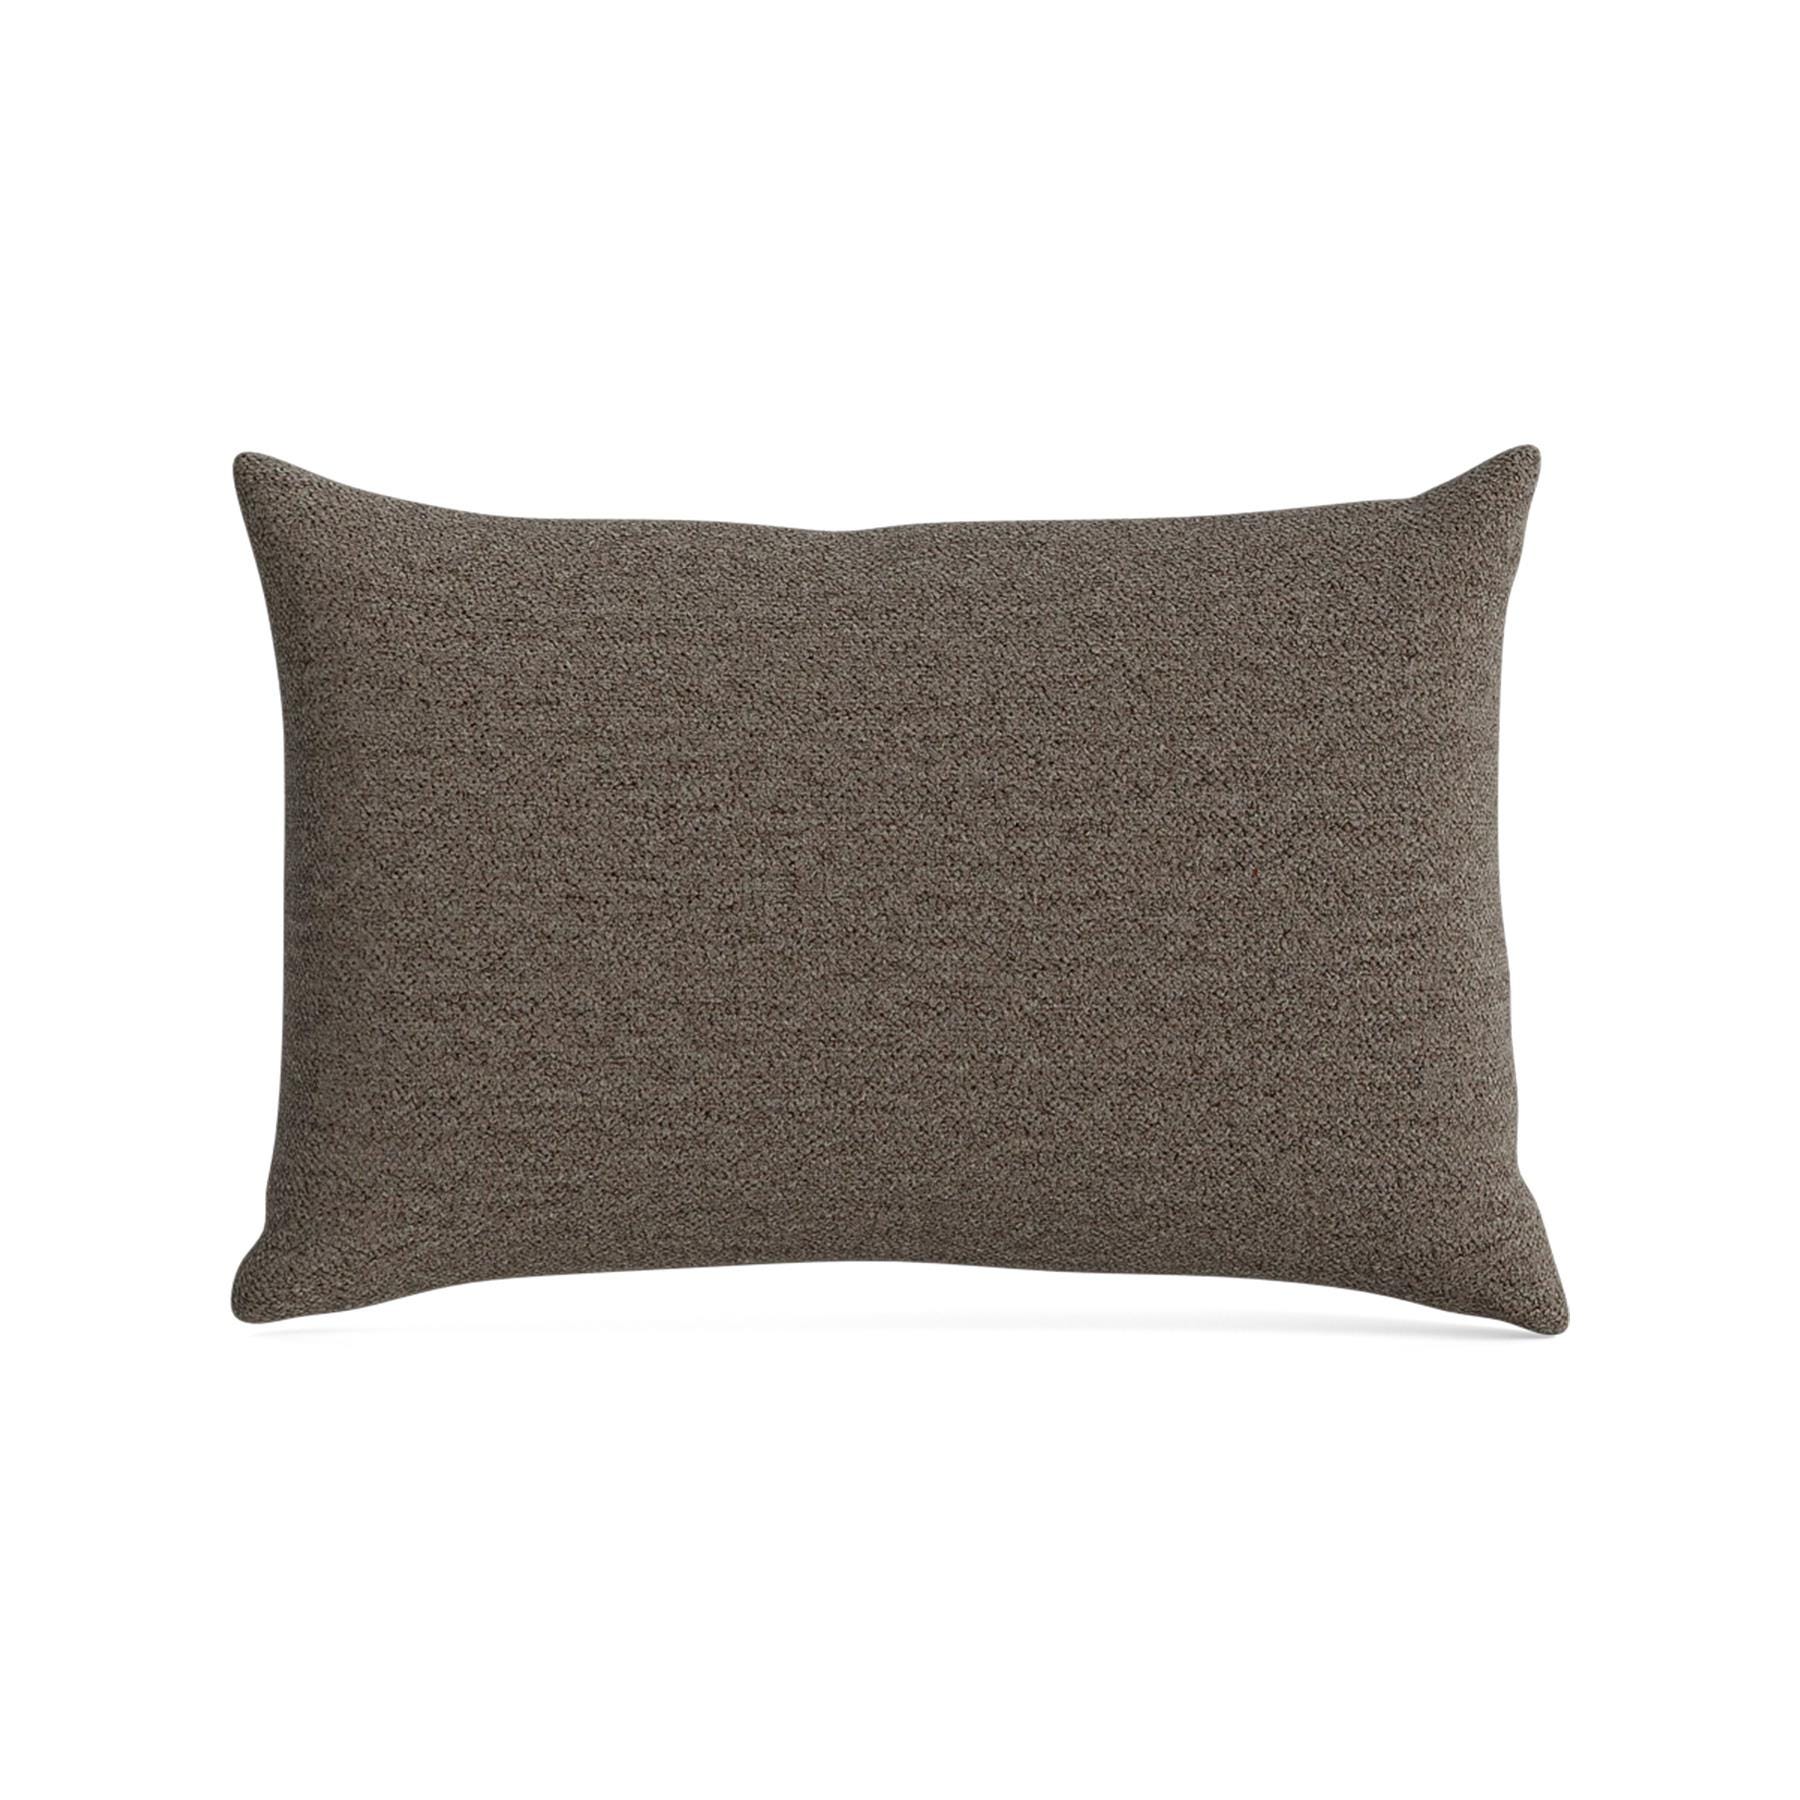 Make Nordic Pillow 40cmx60cm Nature Boucle 10 Down And Fibers Brown